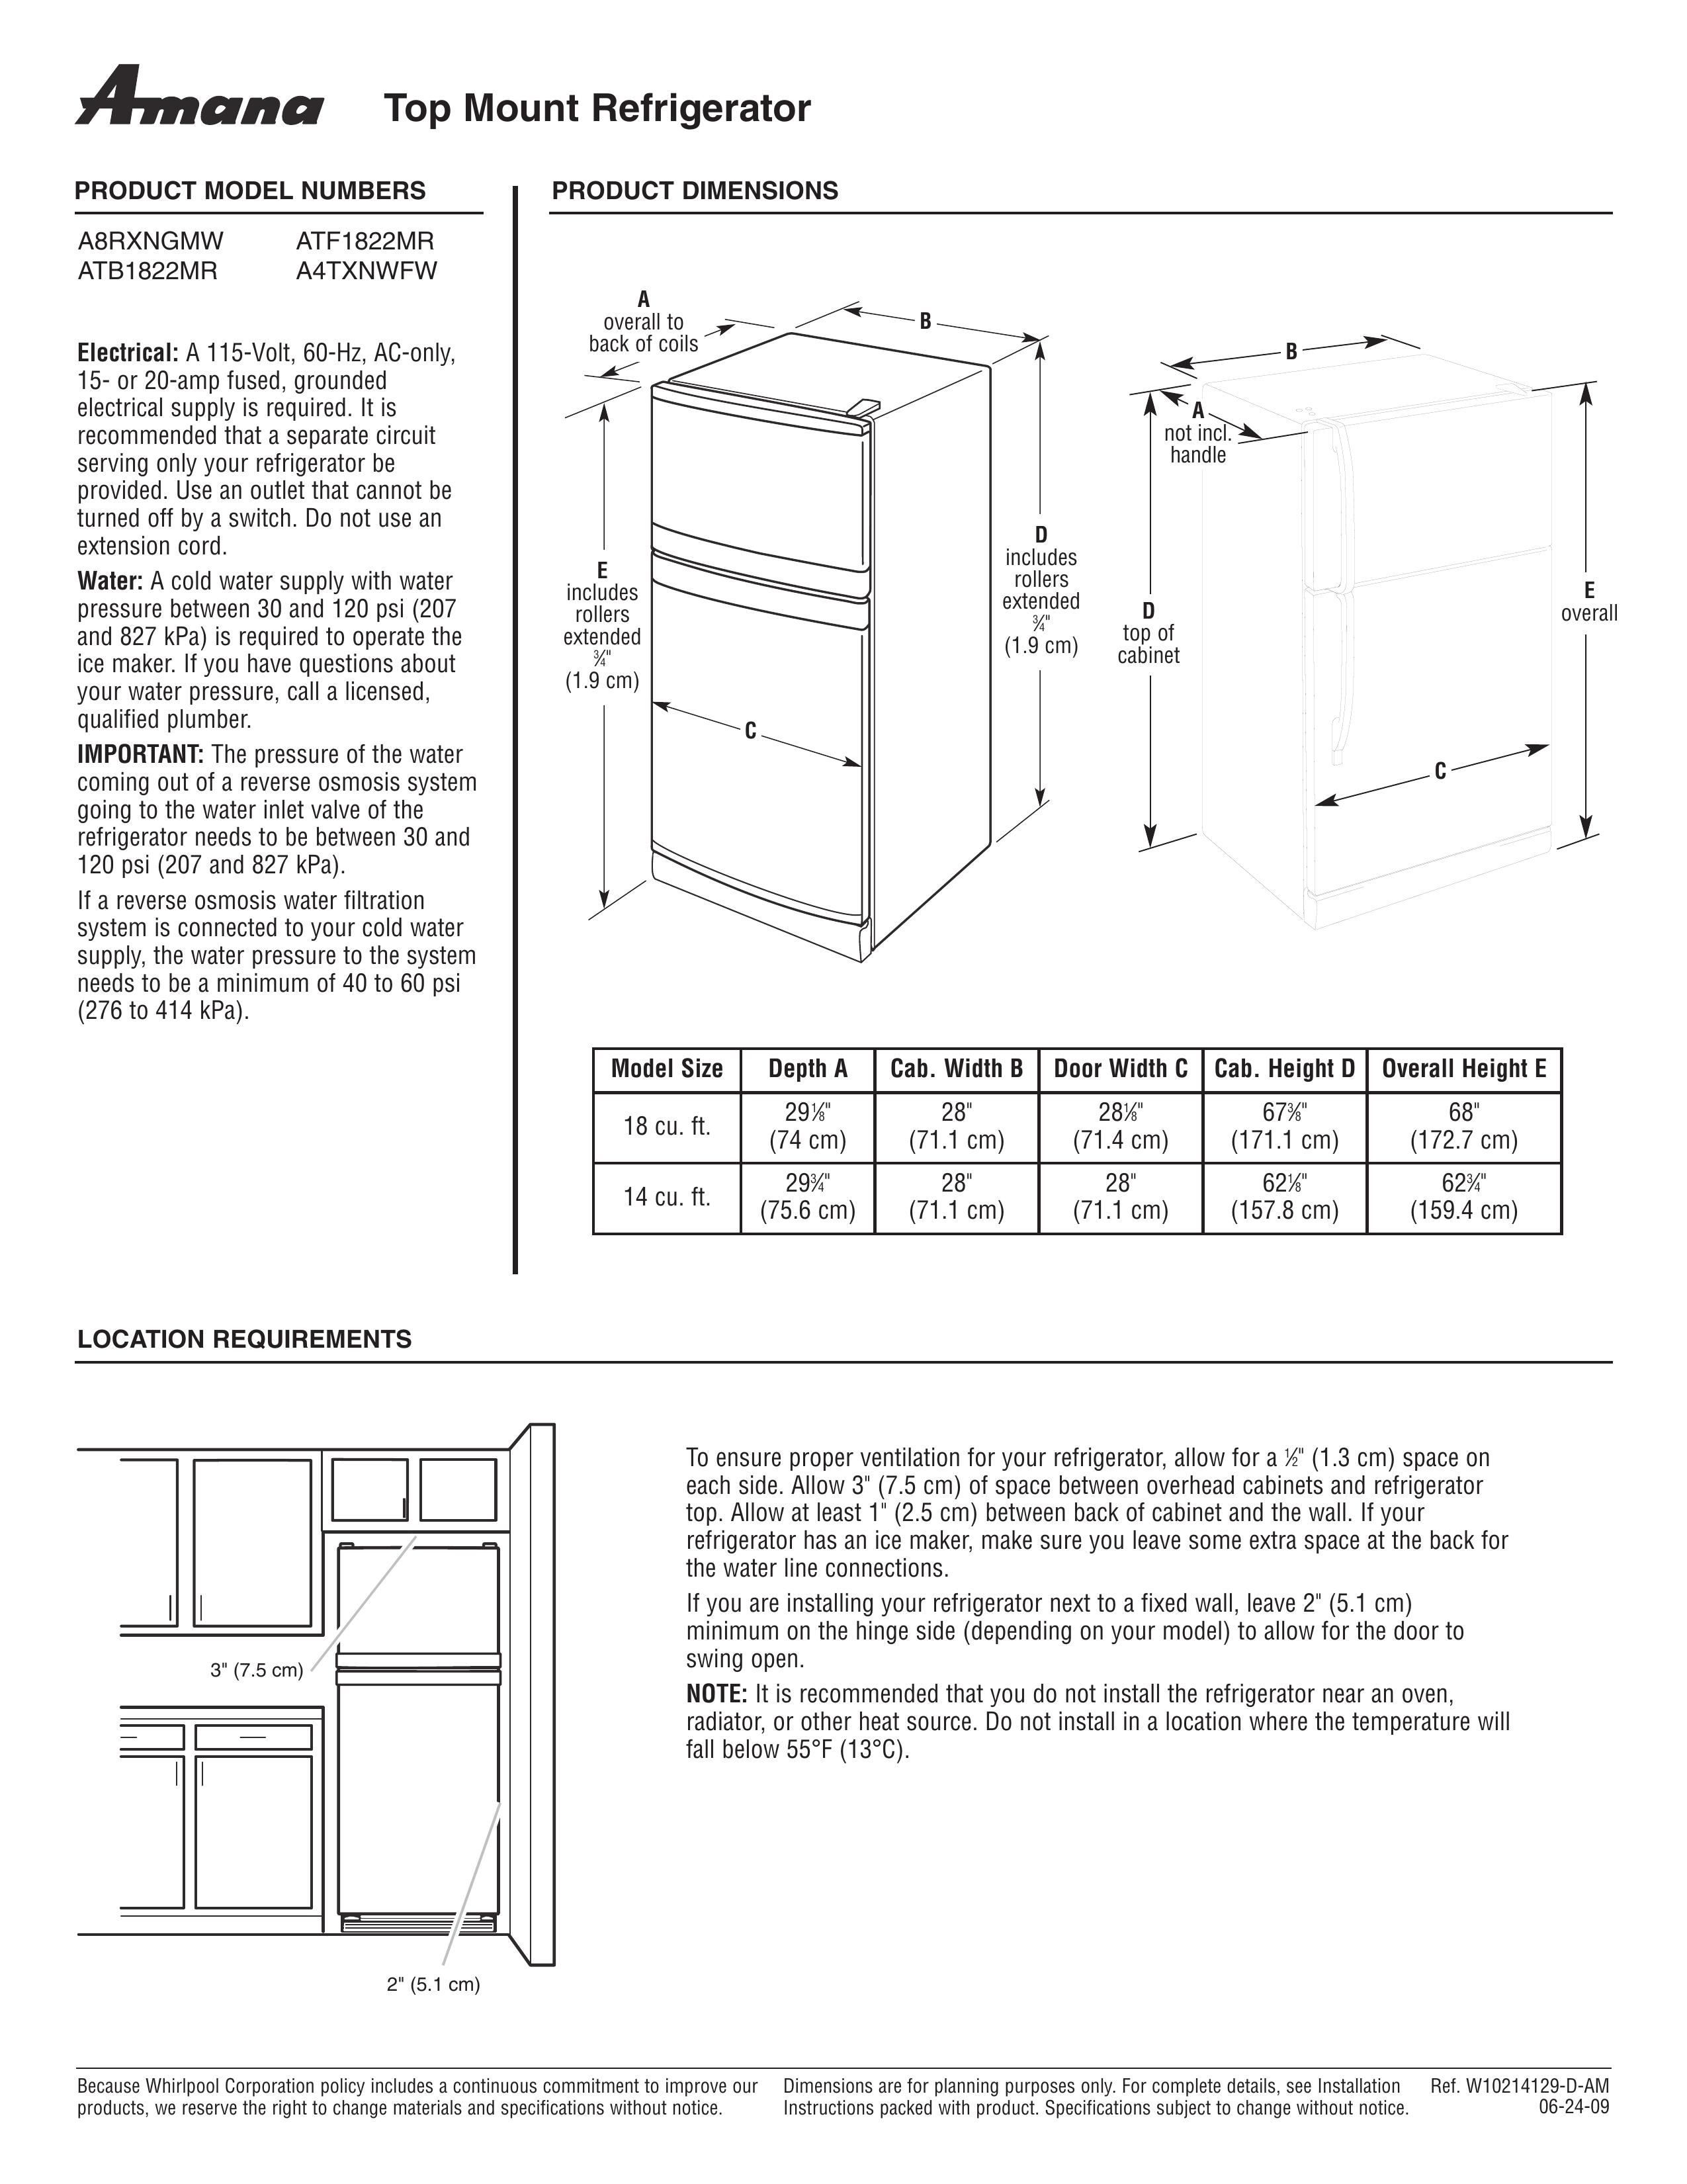 Amana A4TXNWFW Refrigerator User Manual